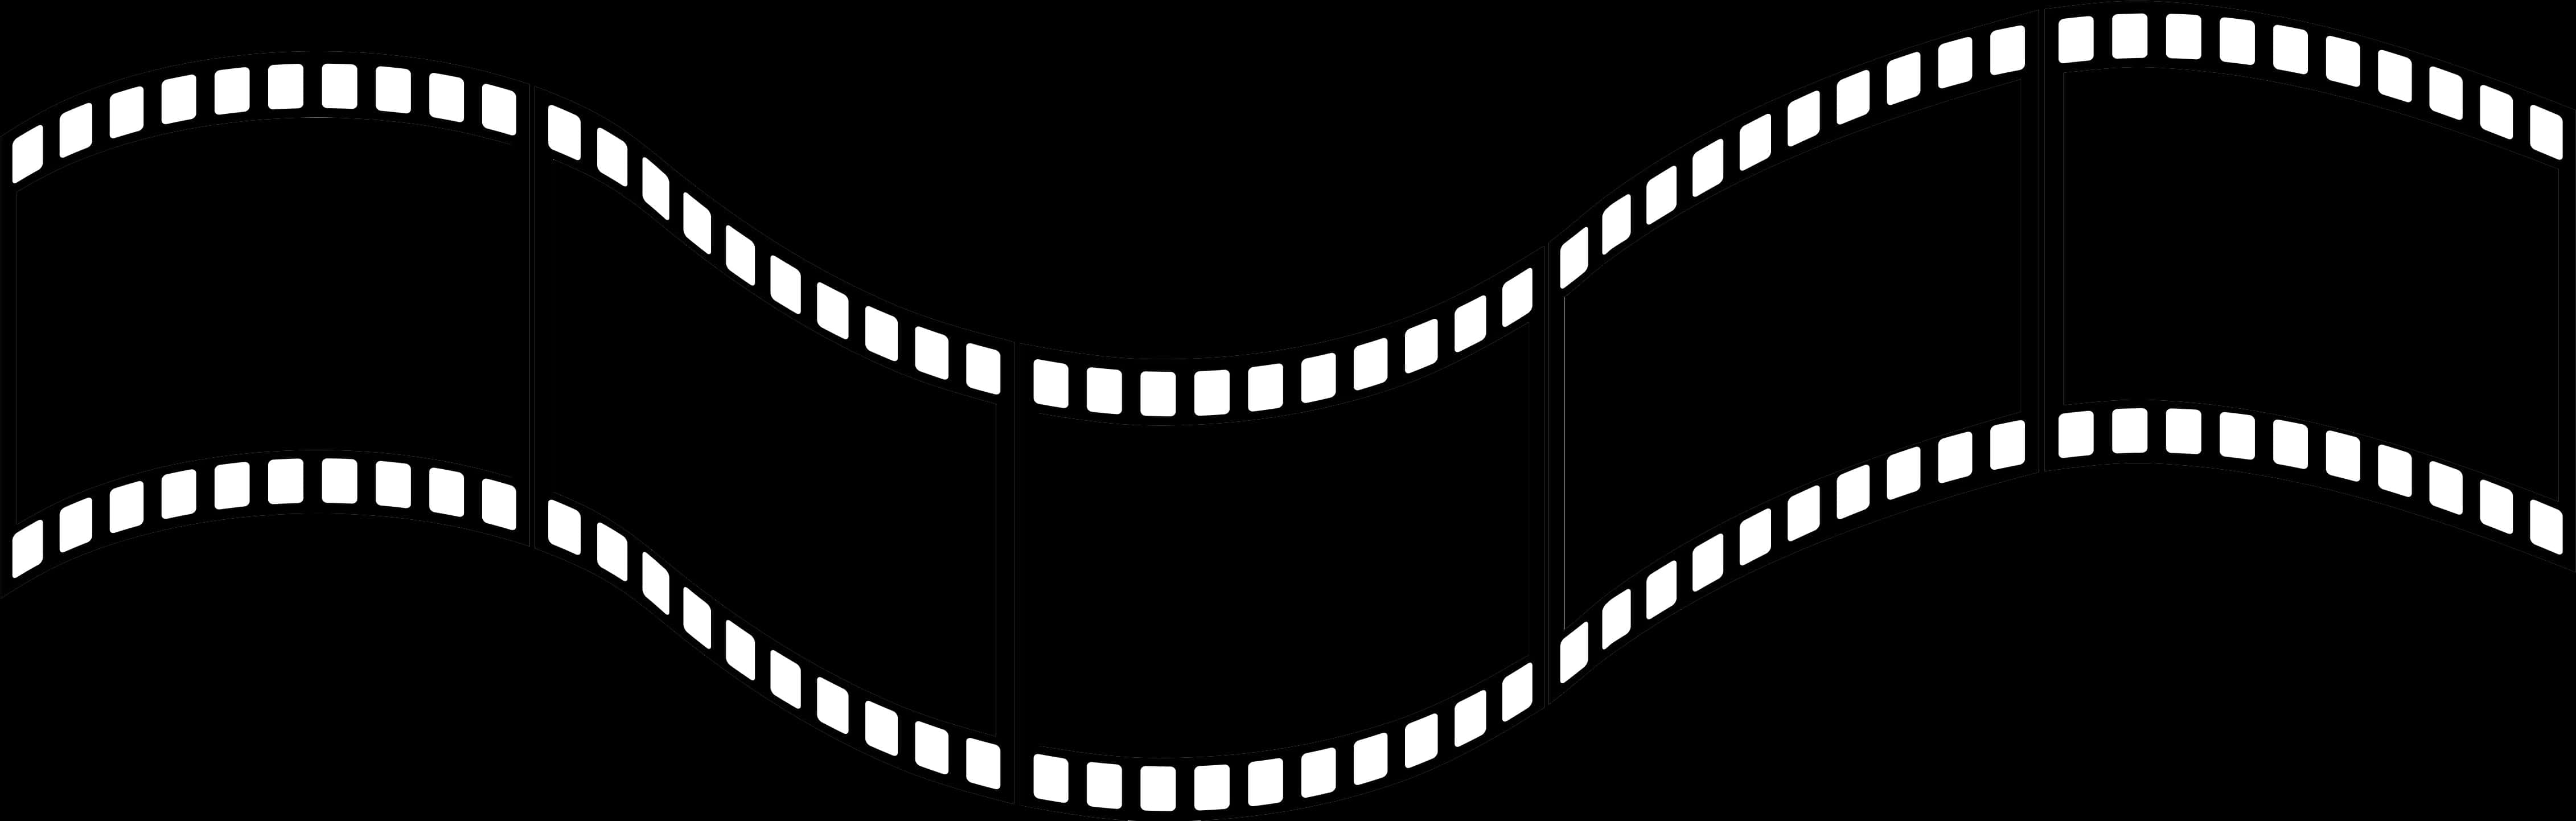 Wavy Film Strip Graphic PNG image